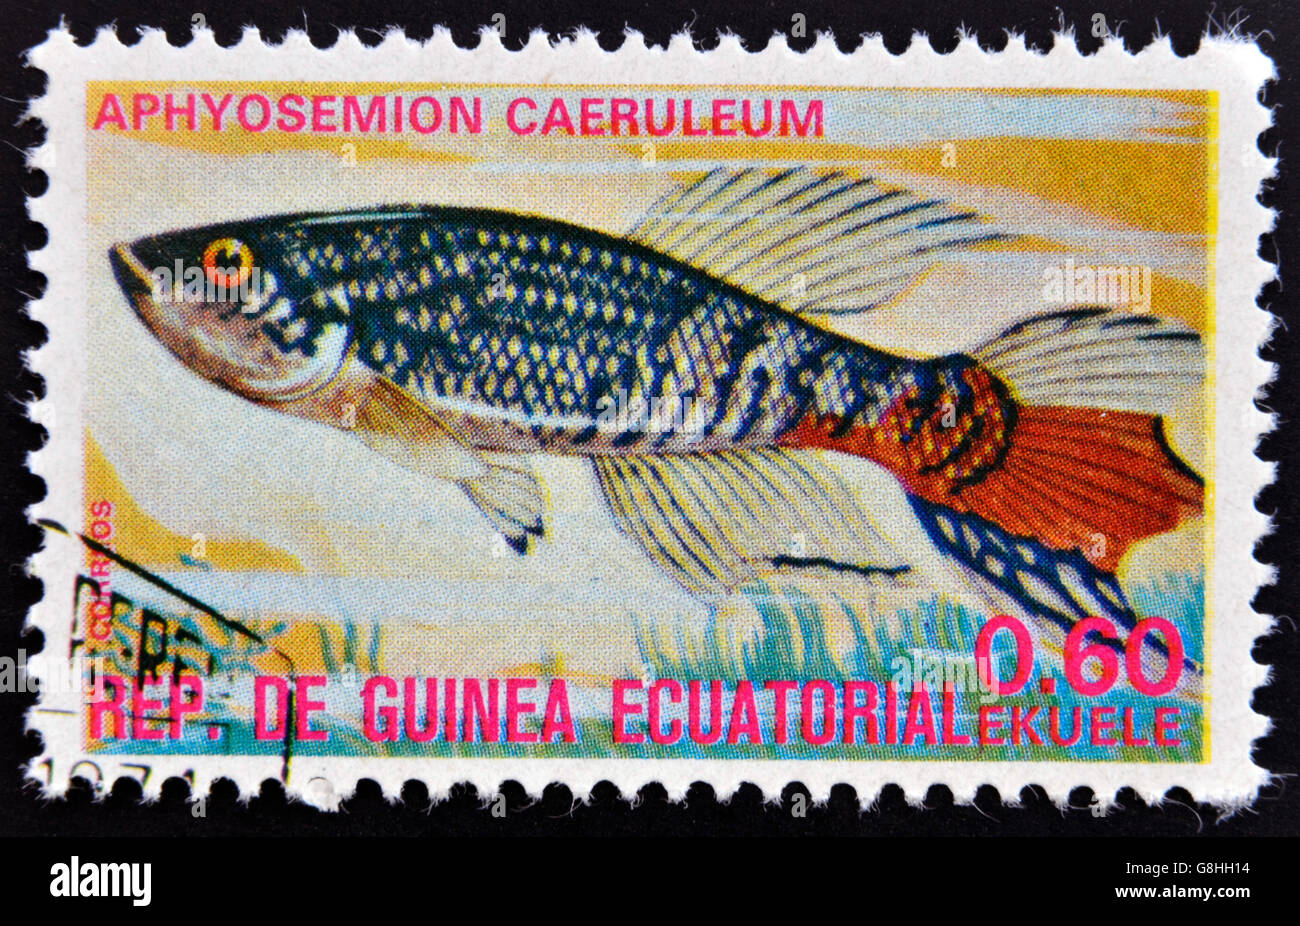 EQUATORIAL GUINEA - CIRCA 1974: A stamp printed in Guinea Ecuatorial dedicated to exotic fish shows aphyosemion caeruleum, circa Stock Photo